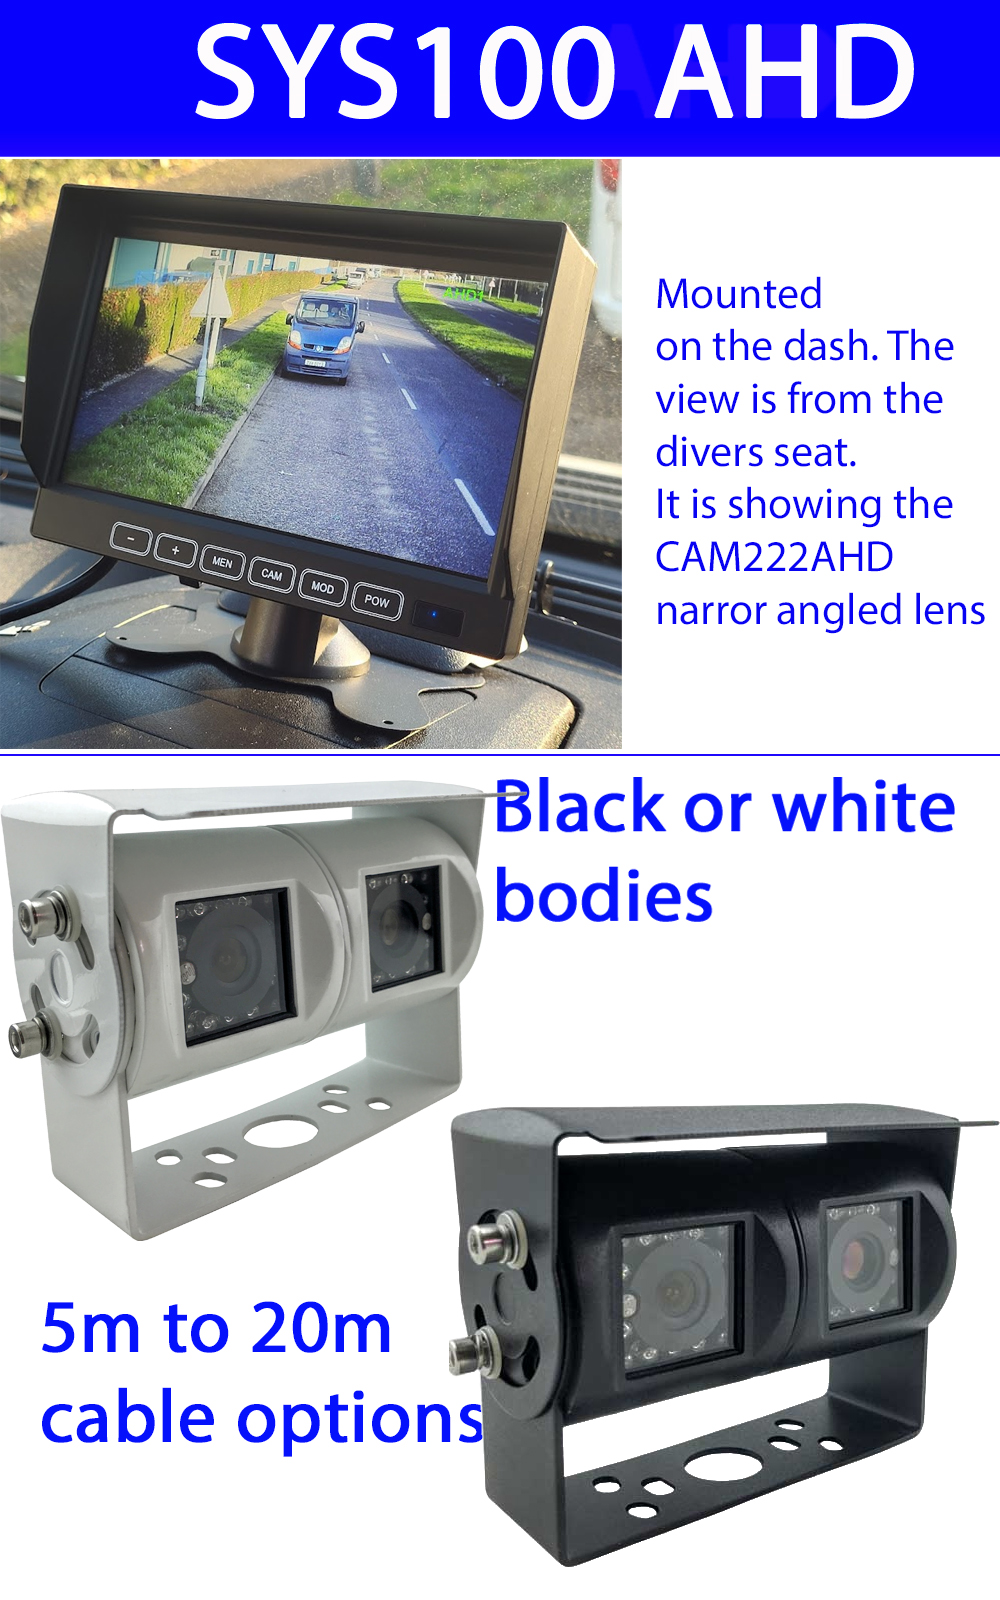 Dash mount AHD monitor and twin lens AHD reversing camera